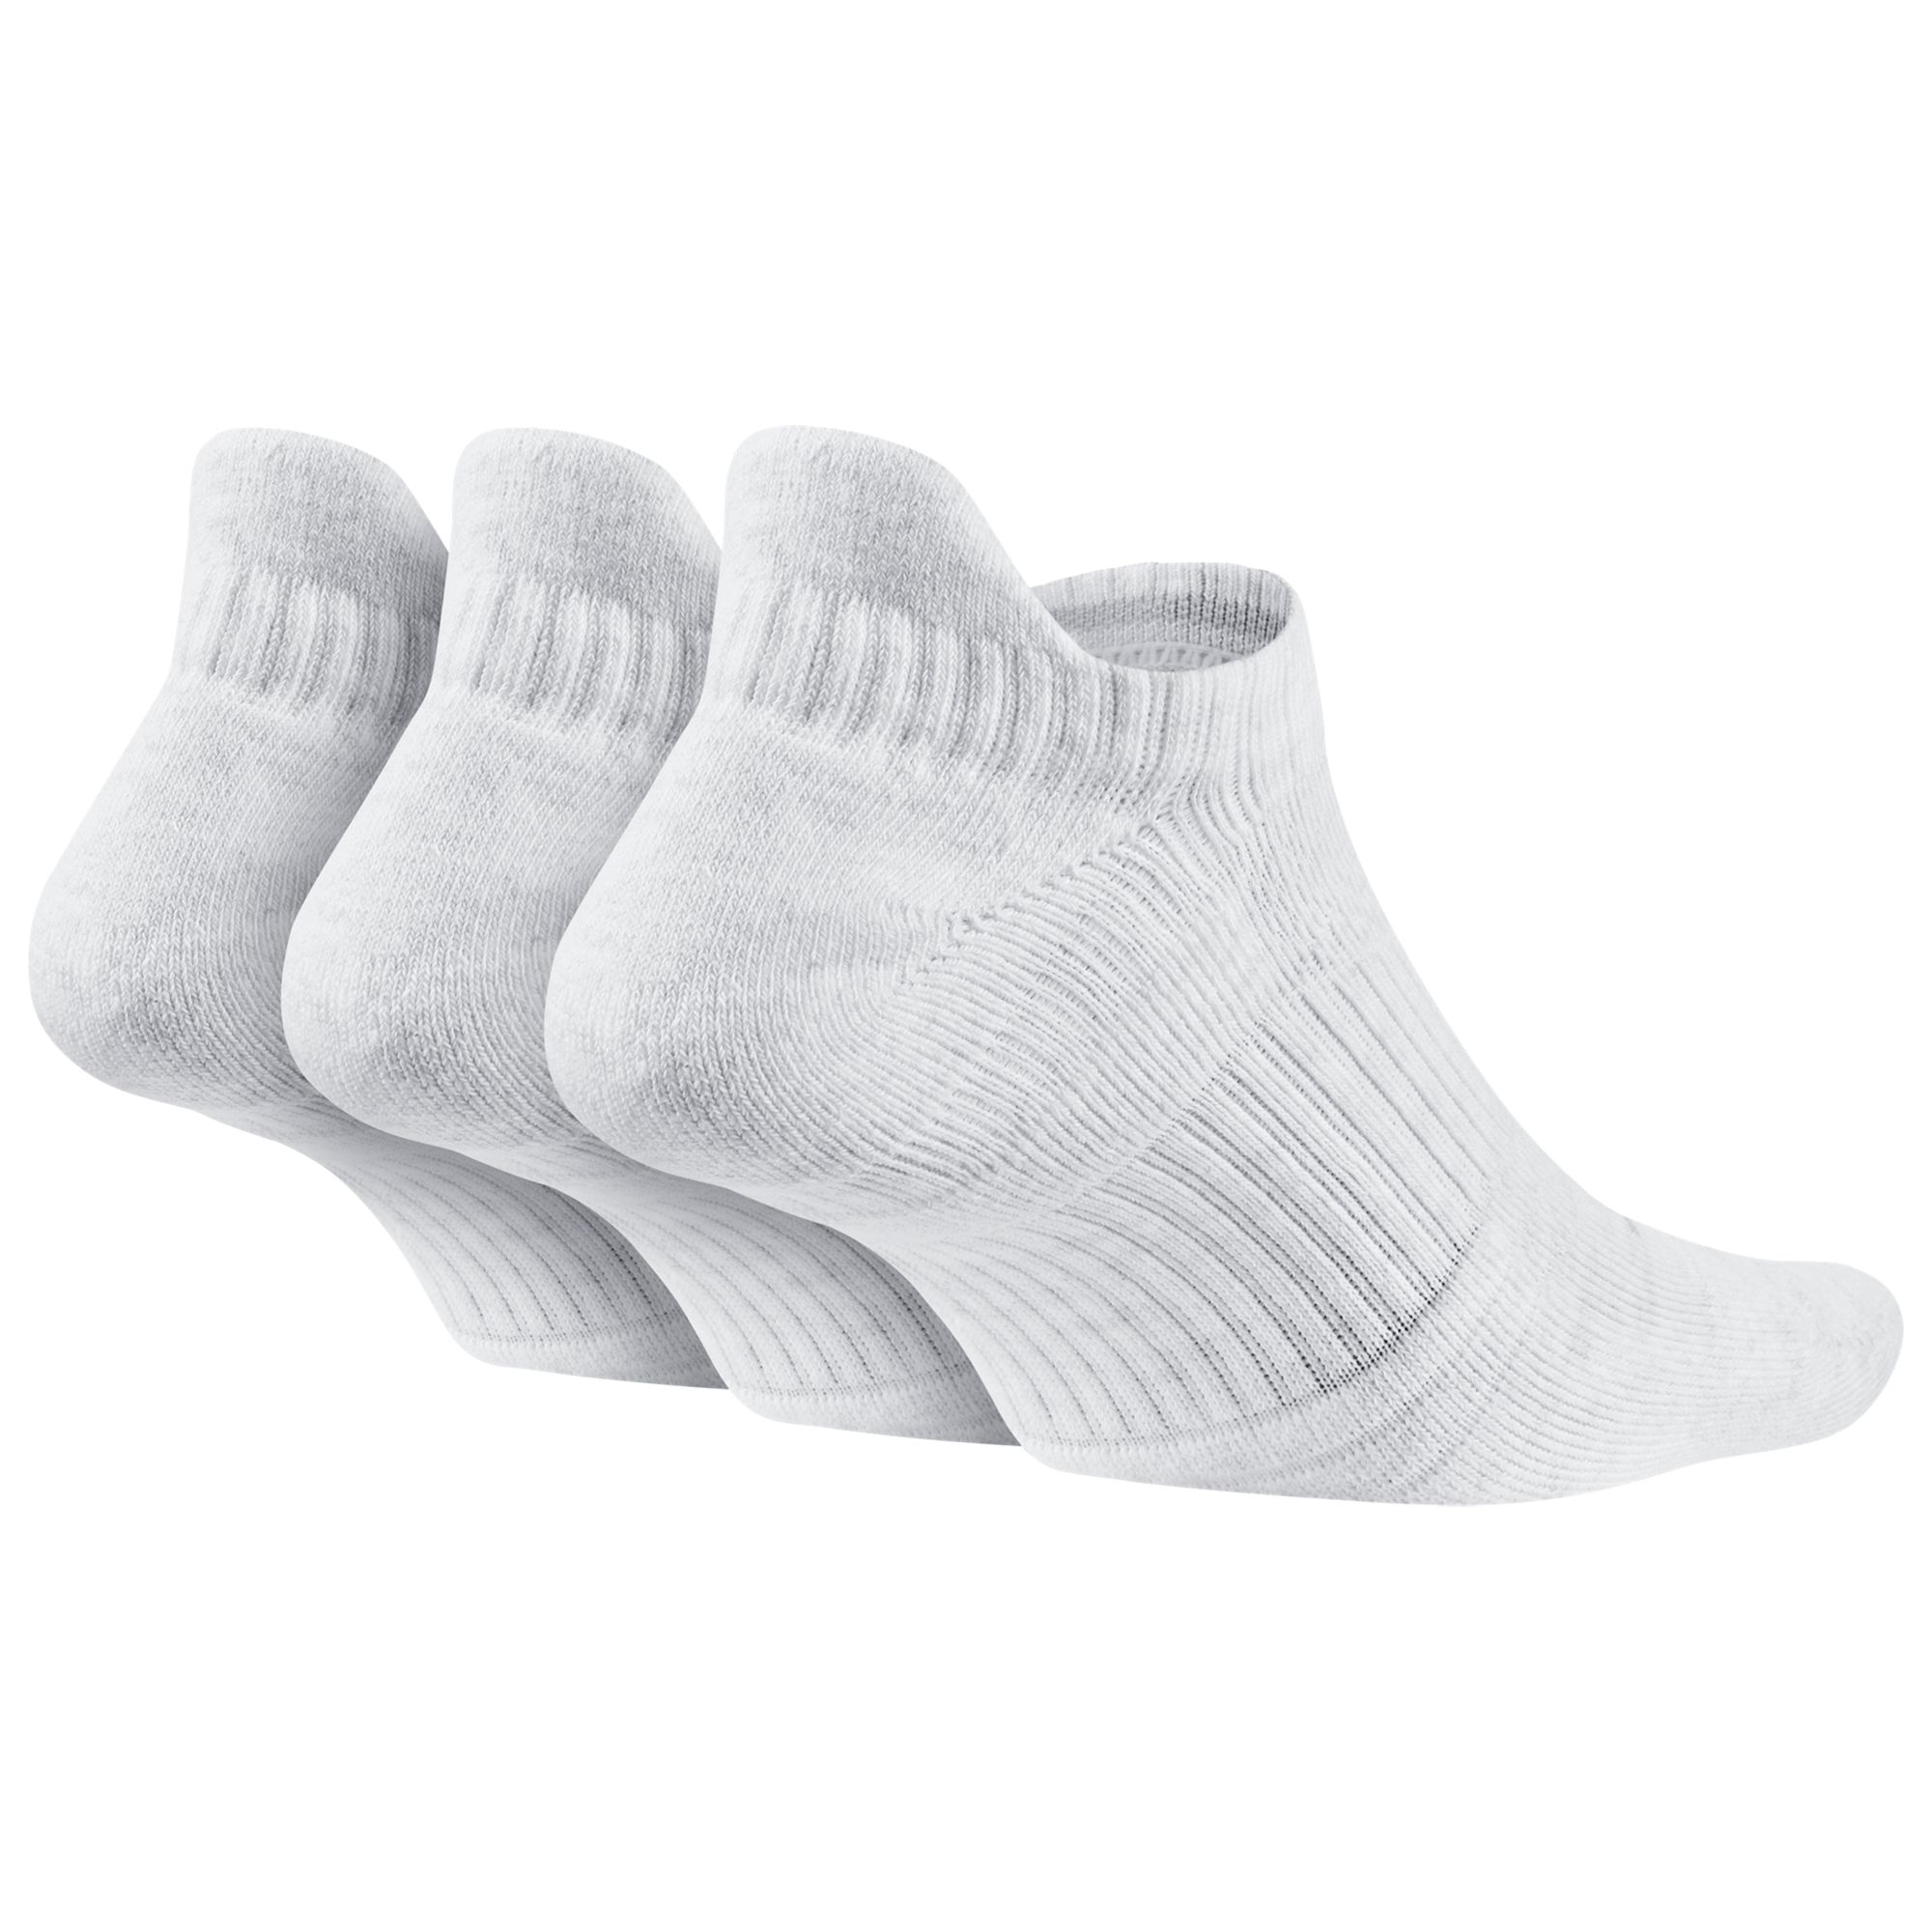 nike socks with heel tab